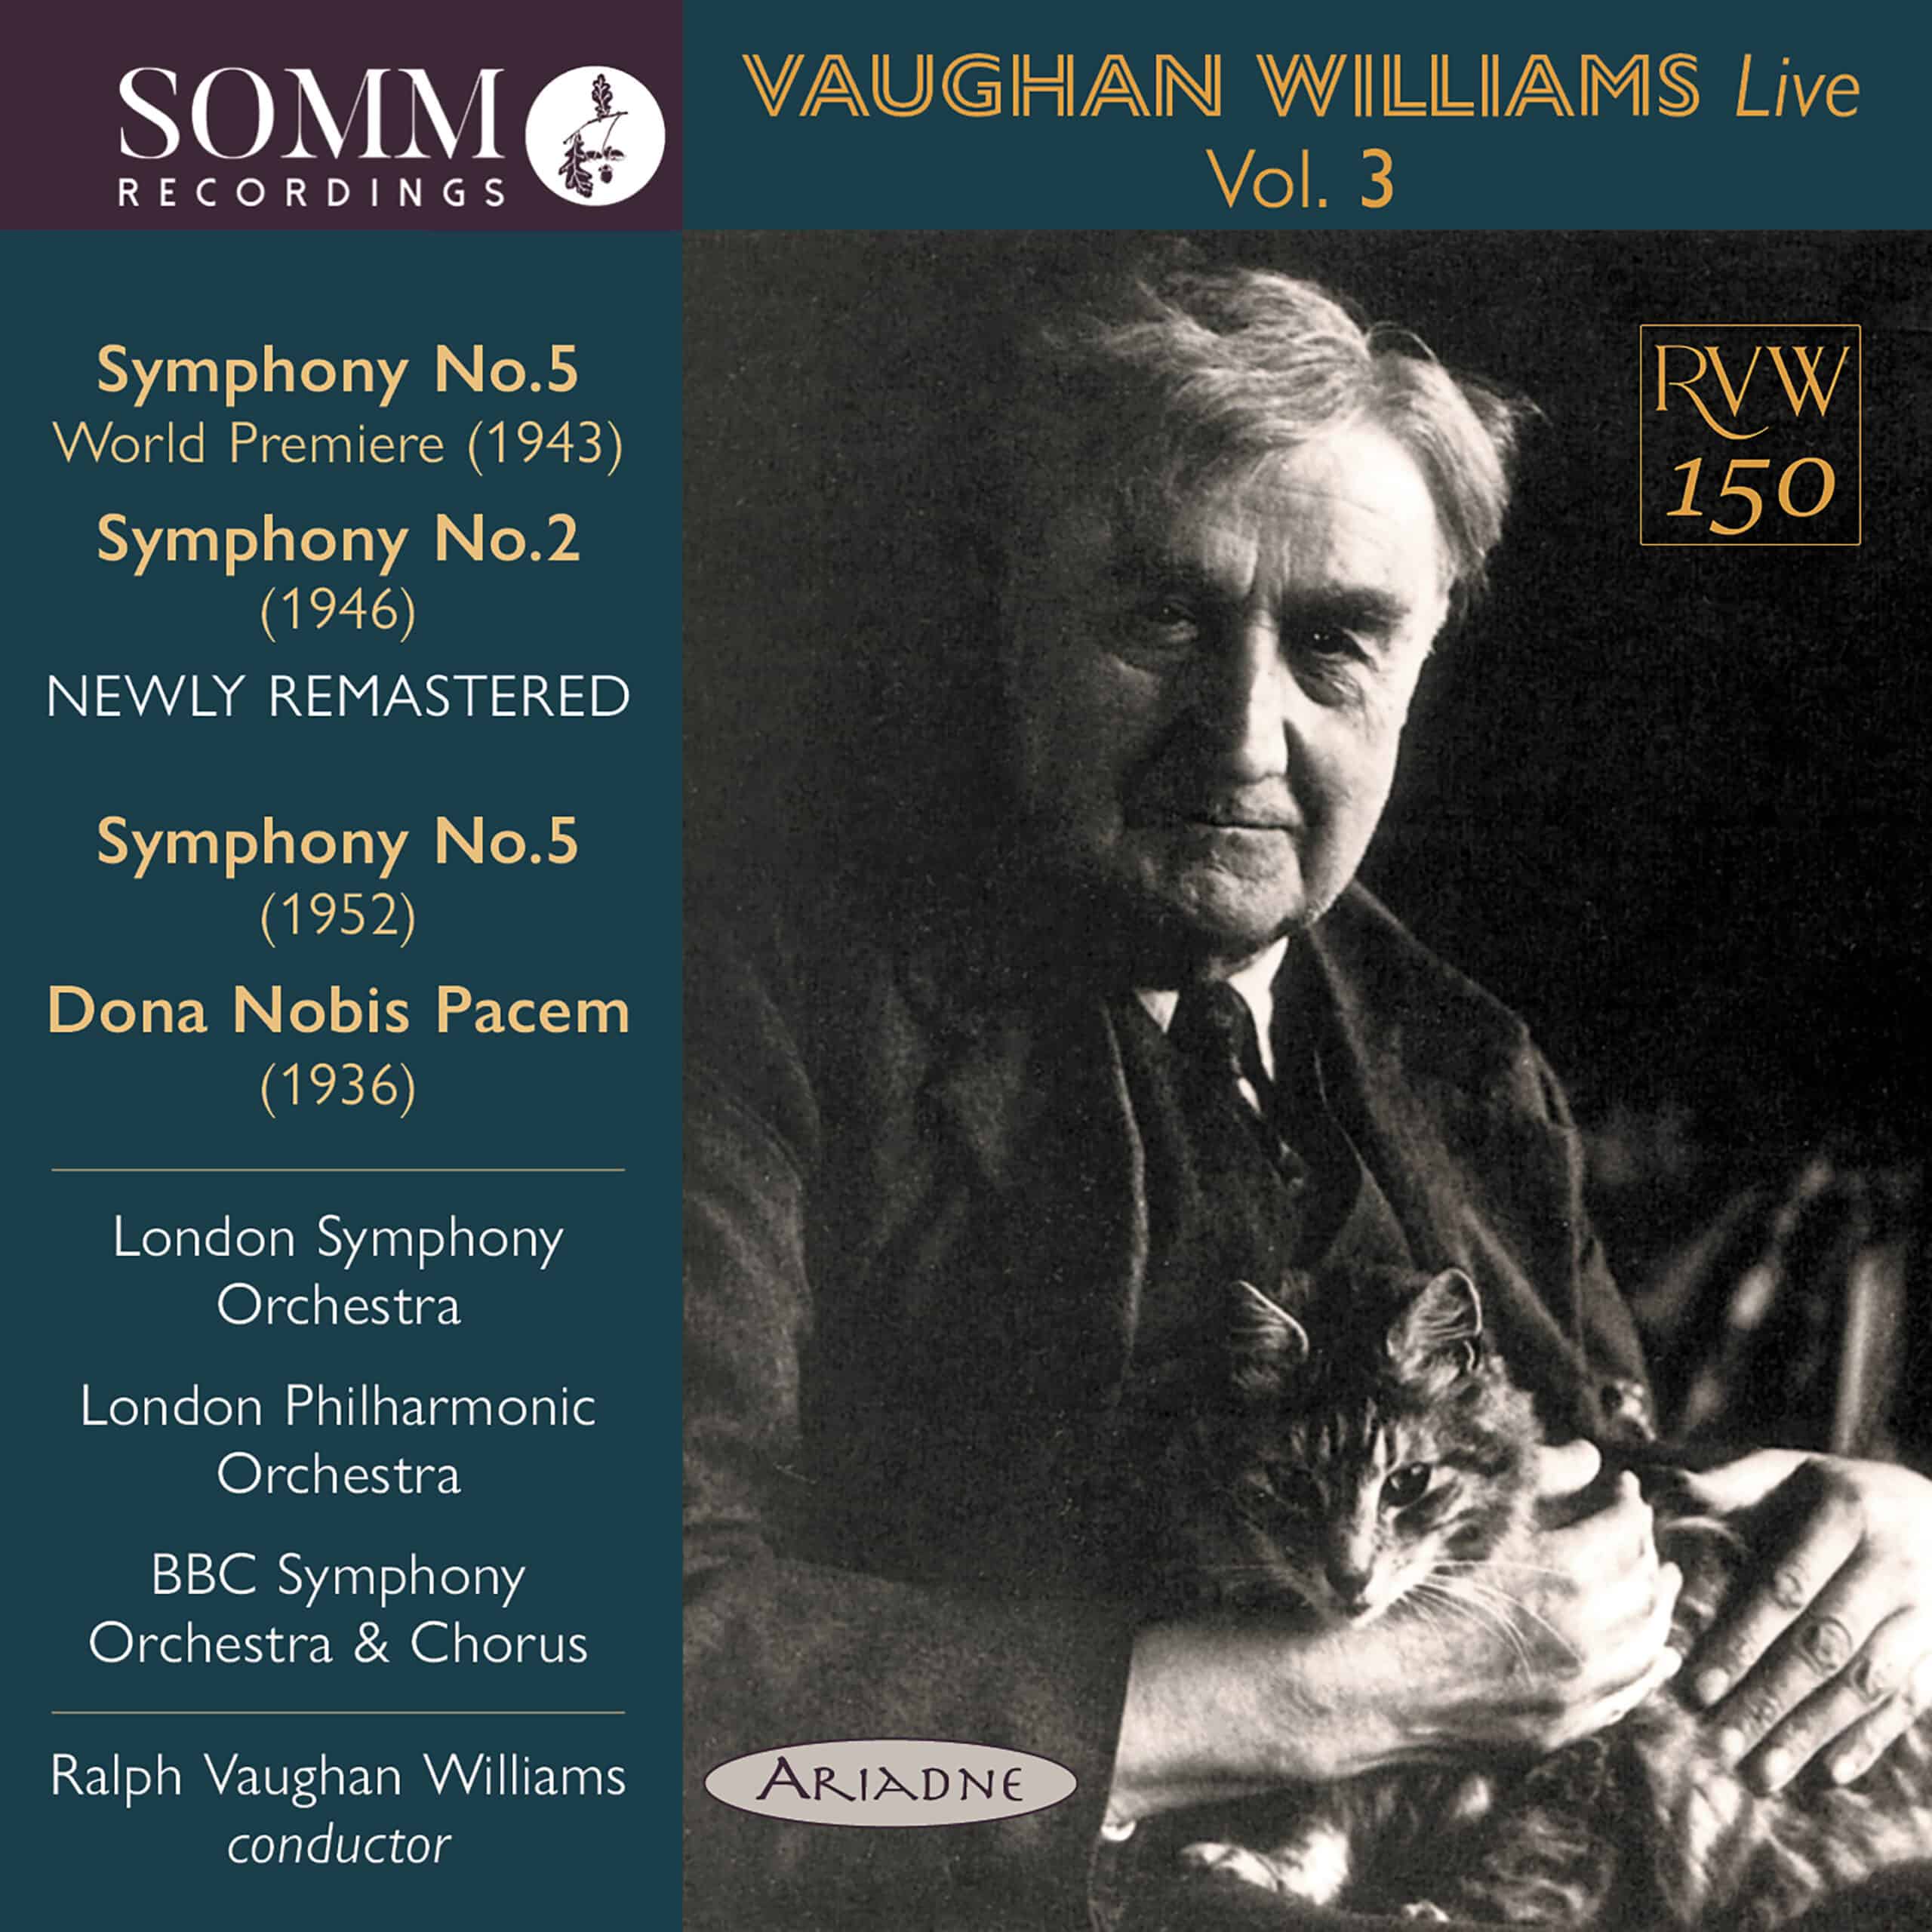 Vaughan Williams Live, Volume 3